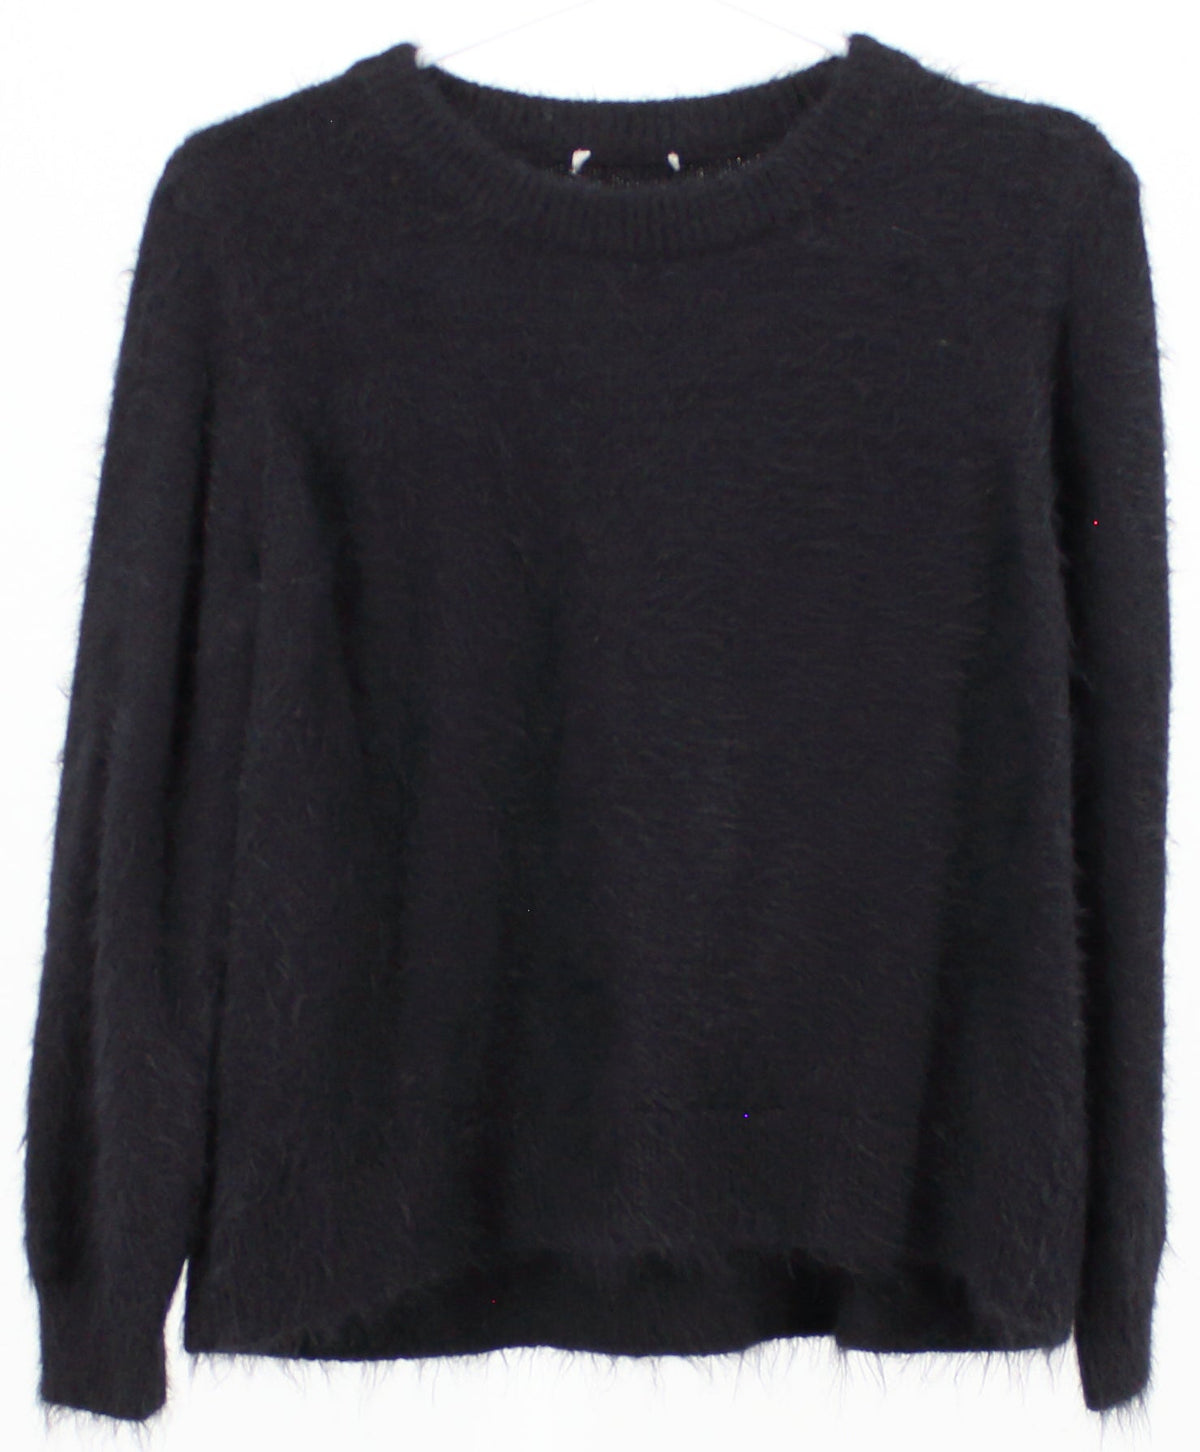 H&M Black Sweater